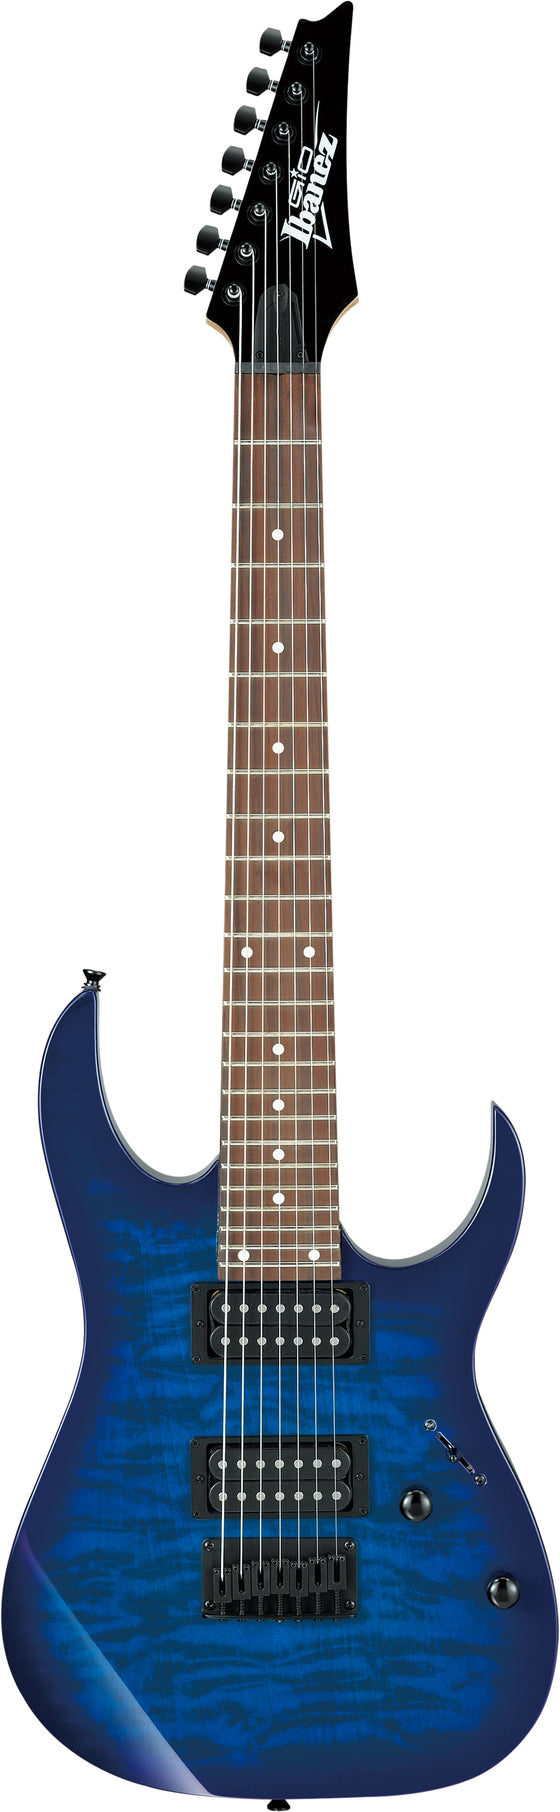 Ibanez GRG7221QATBB Gio Series Double Cut 7 String Electric Guitar (Transparent Blue Burst)